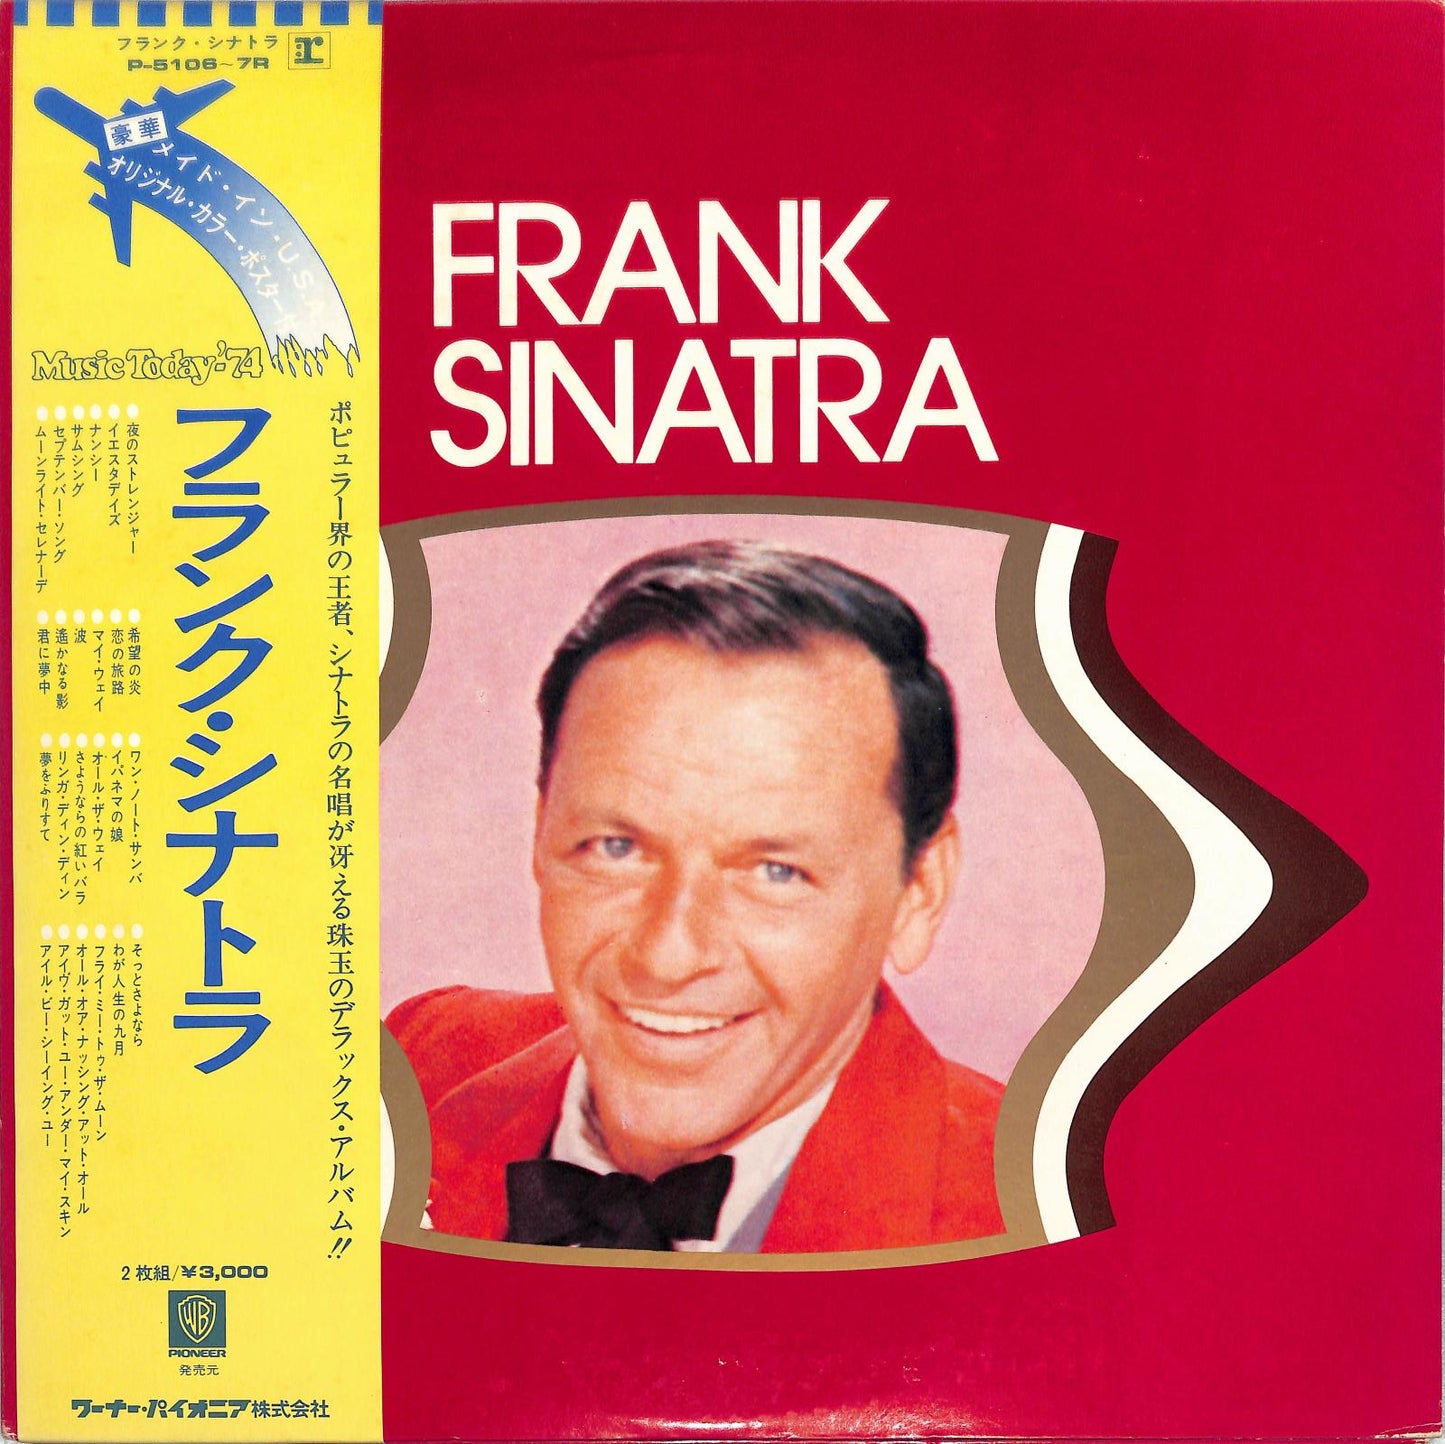 FRANK SINATRA - Frank Sinatra